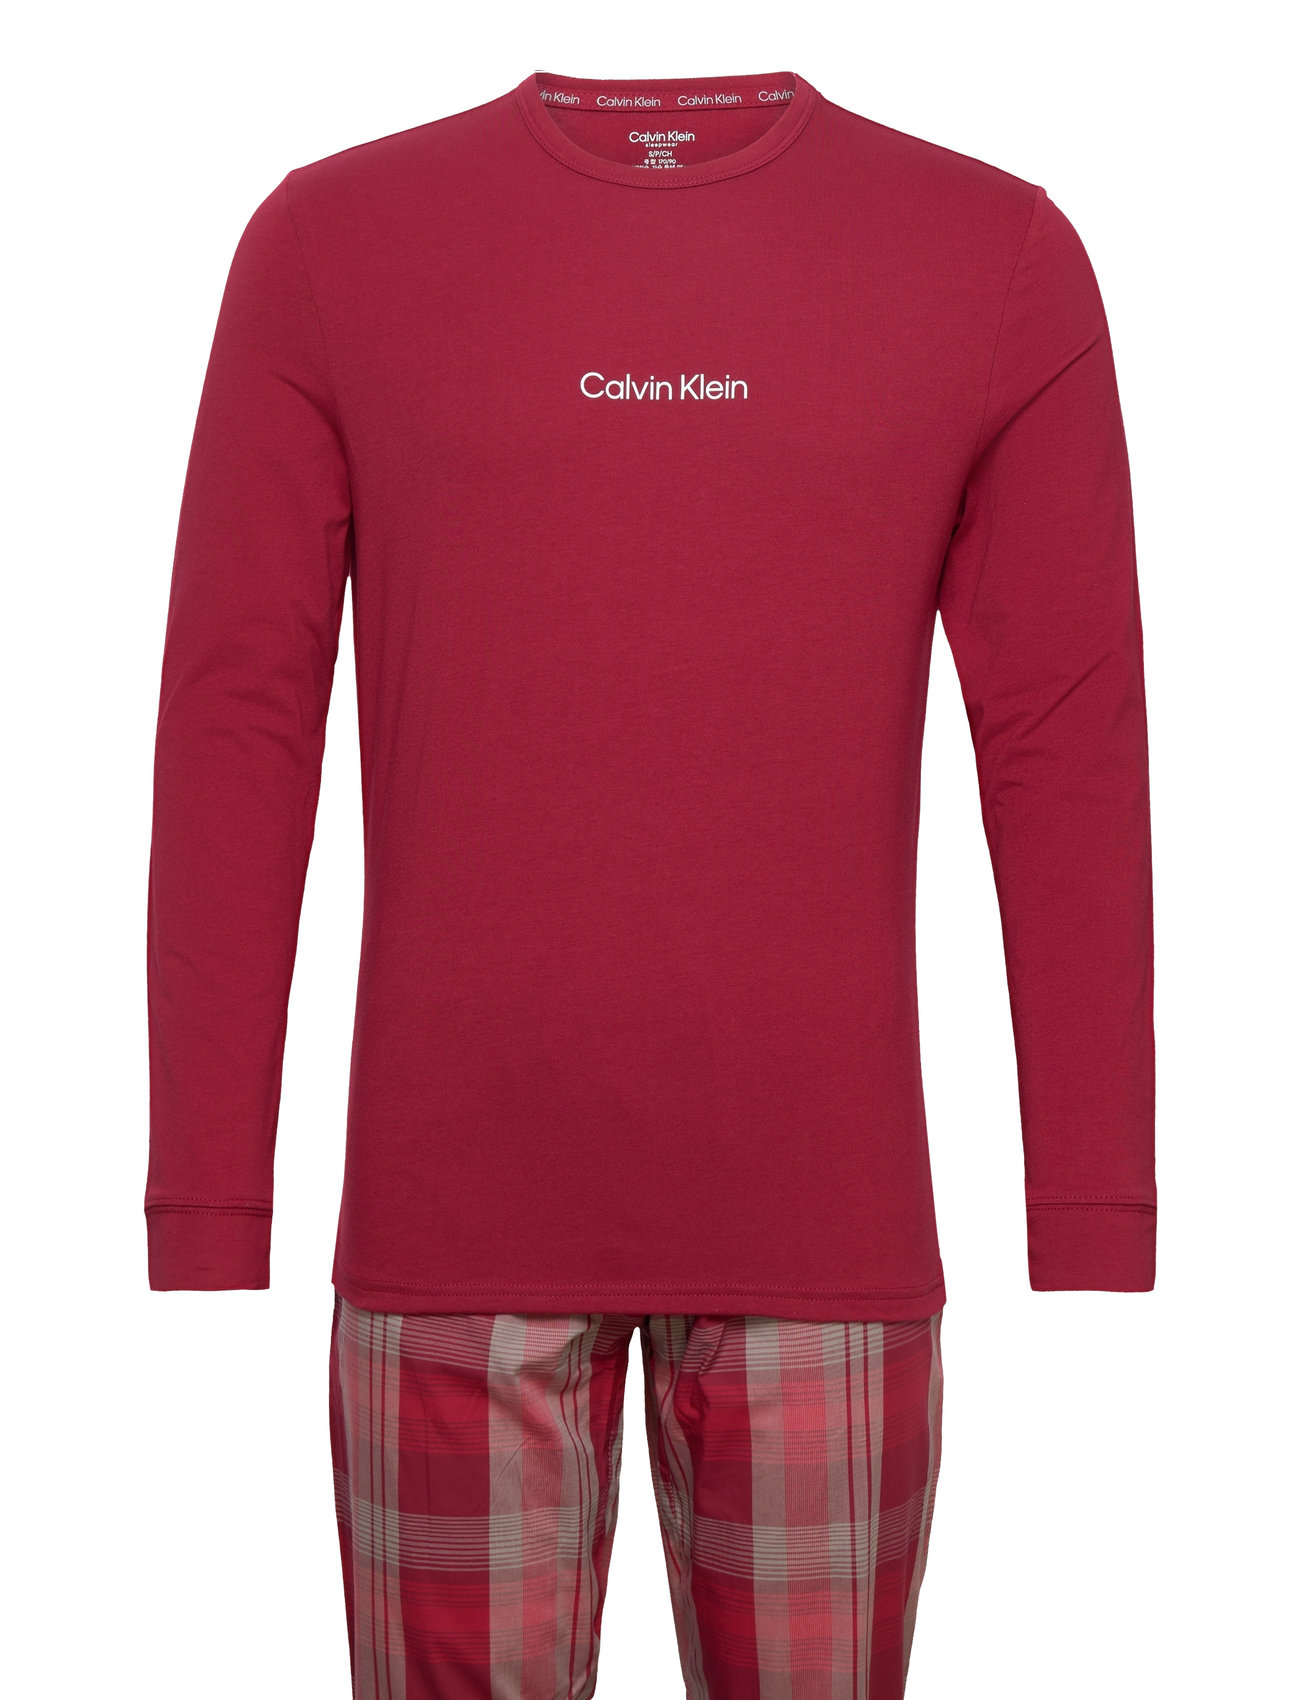 Calvin Klein L/s Pant Set - Pyjamas Boozt.com